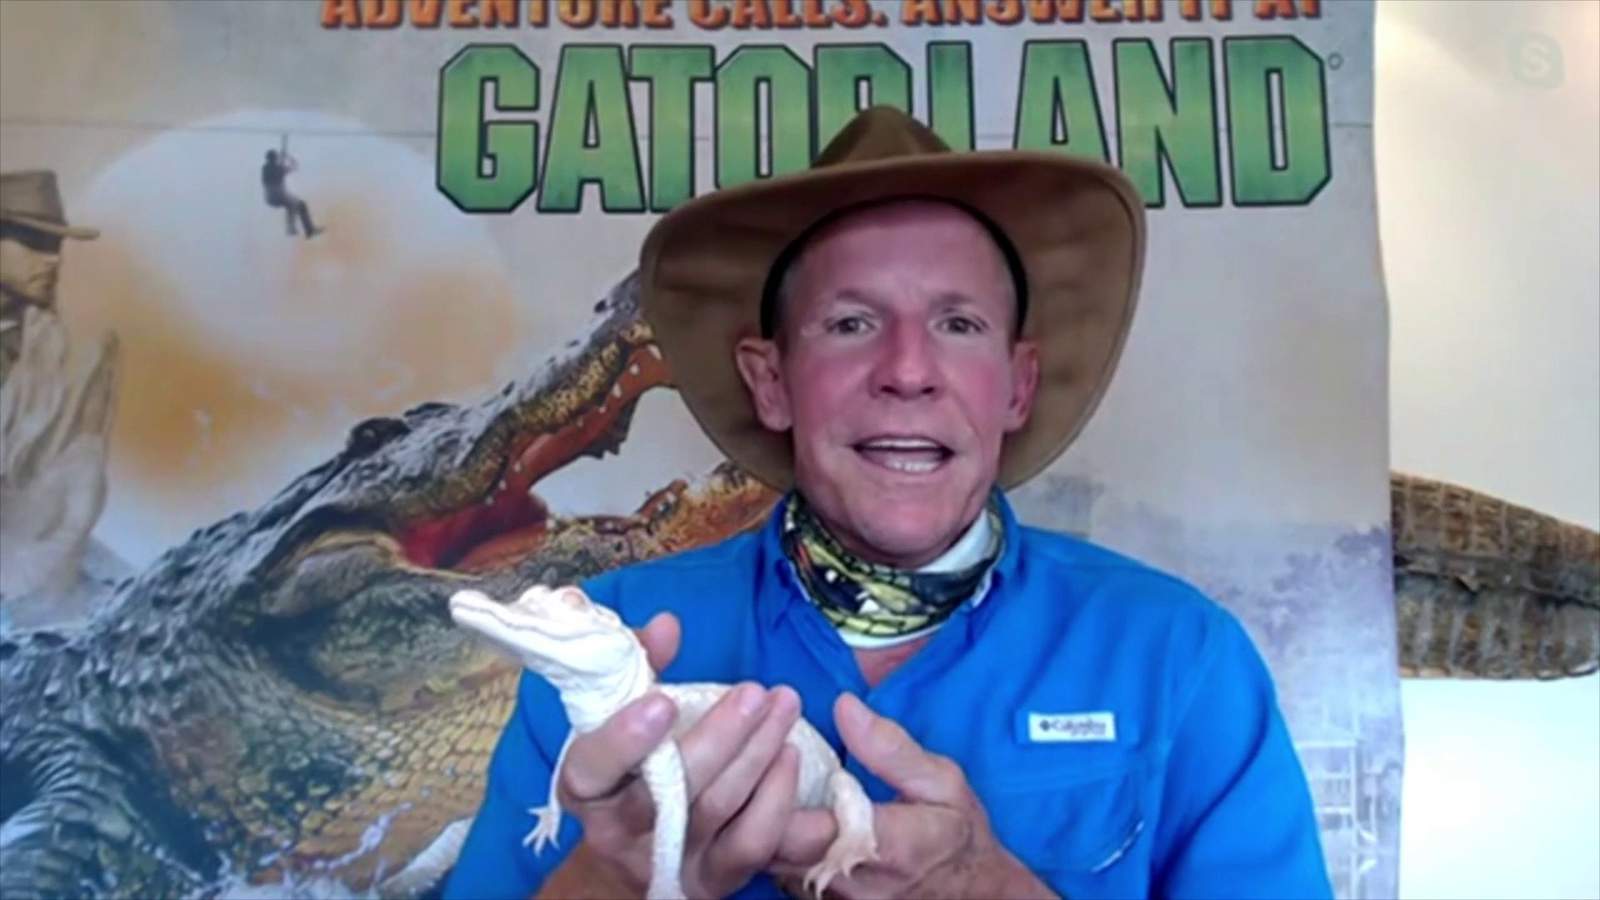 How Gatorland’s CEO kept reptiles, employees happy during coronavirus closure